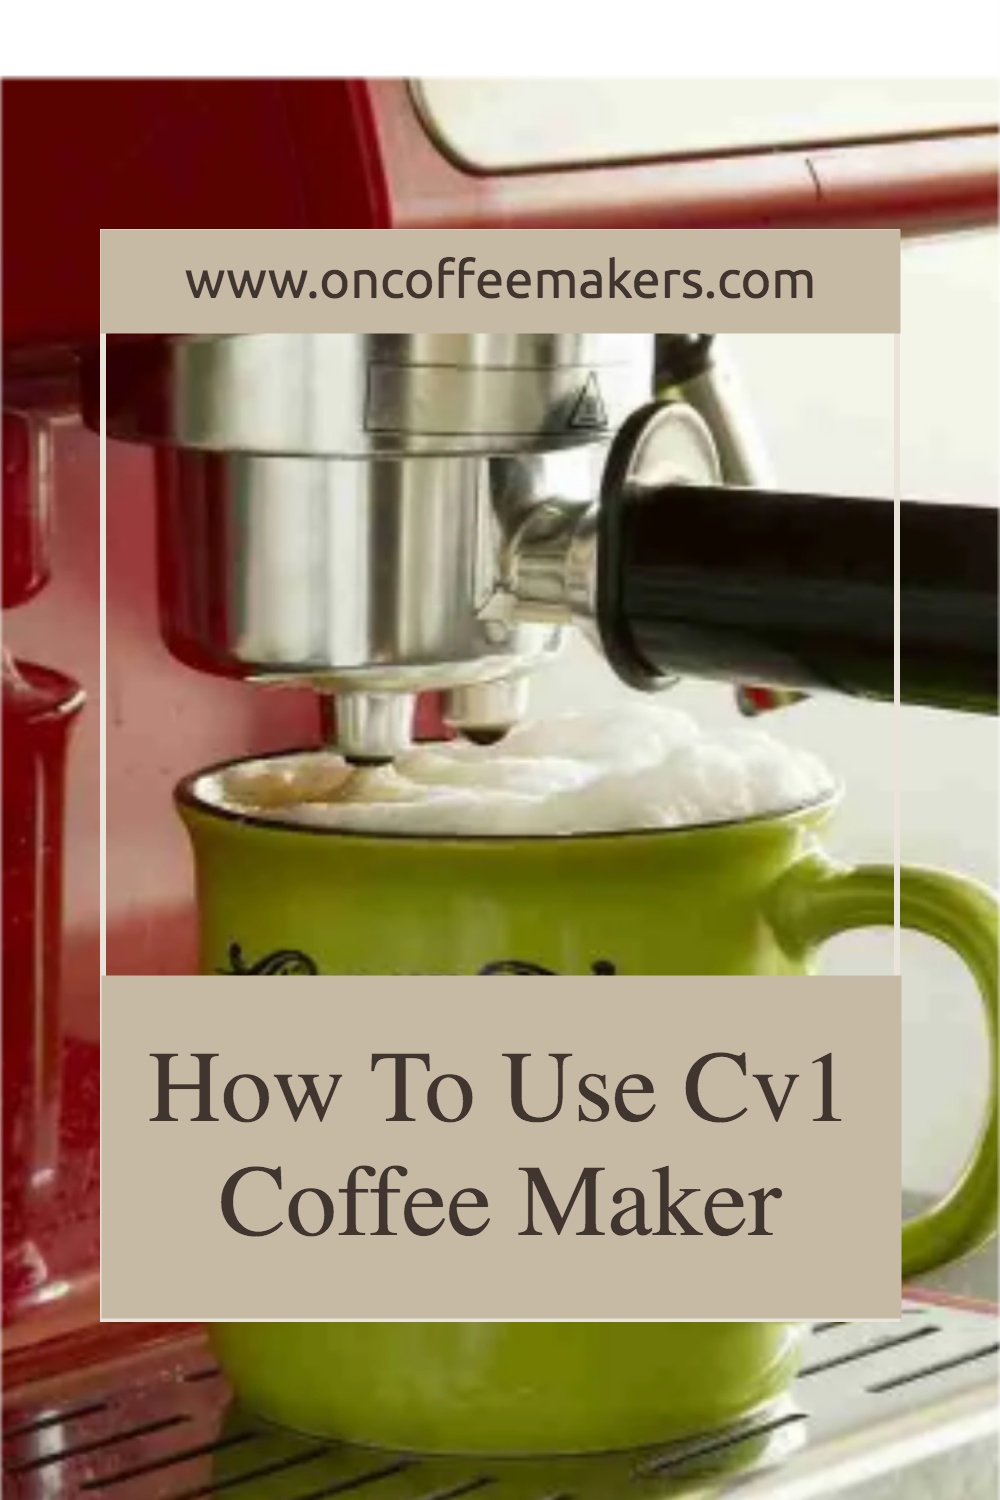 How-To-Use-Cv1-Coffee-Maker.jpg